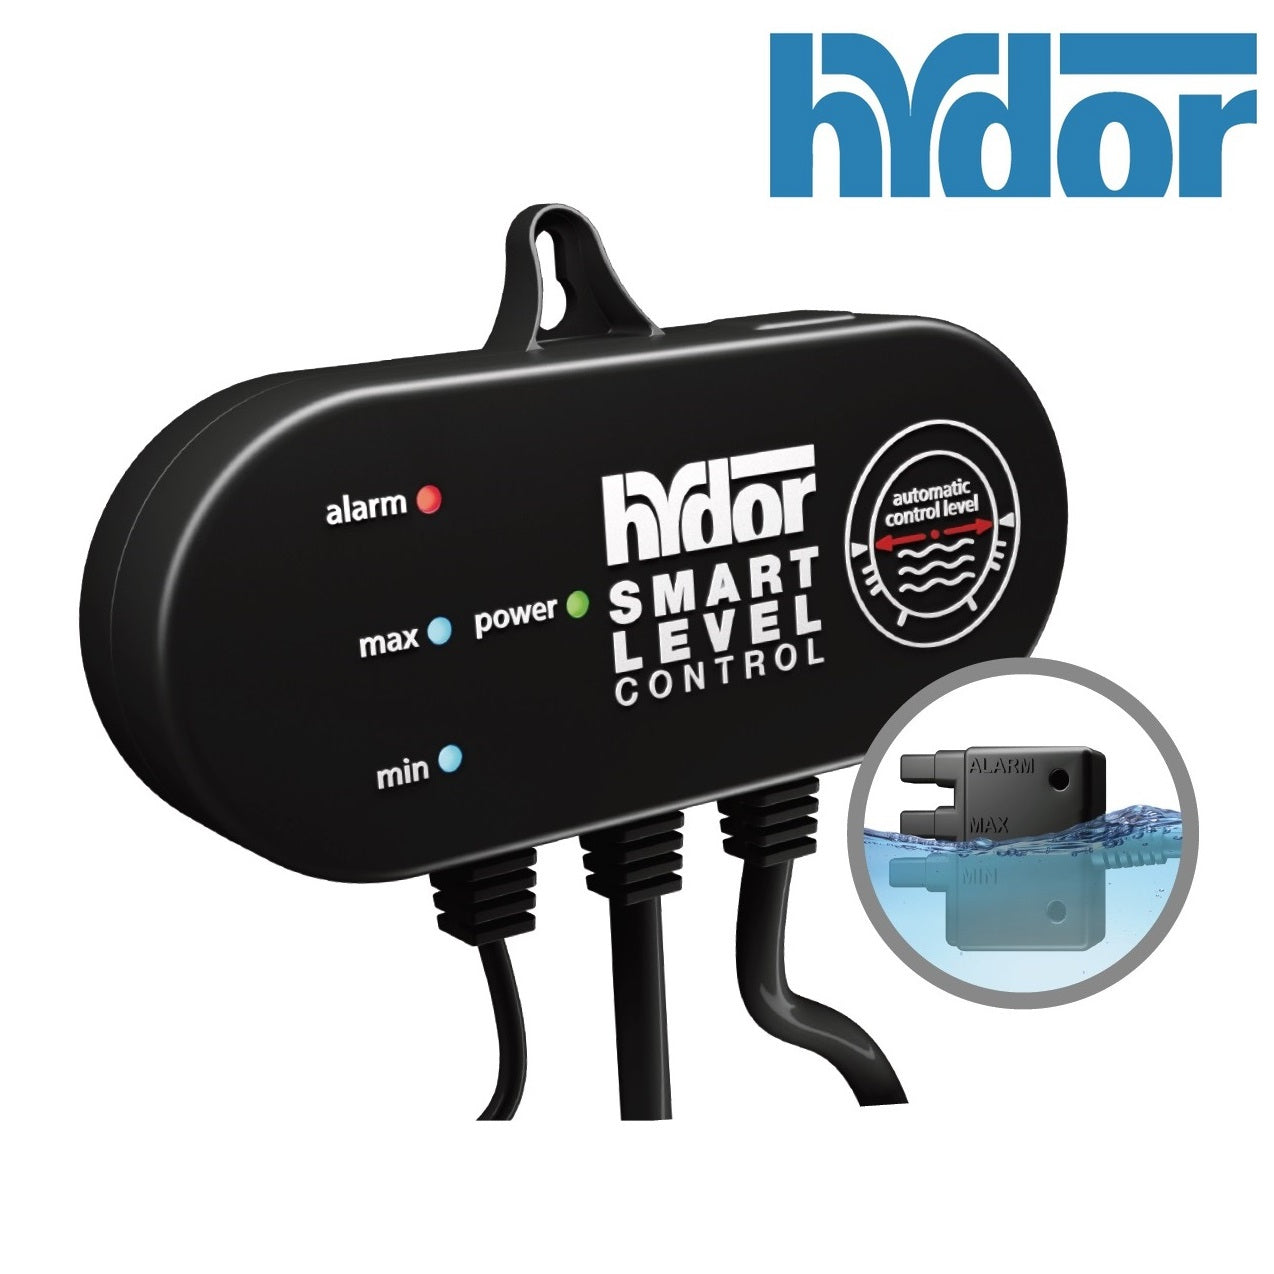 Hydor Smart Level Control Water Level Sensor Alarm